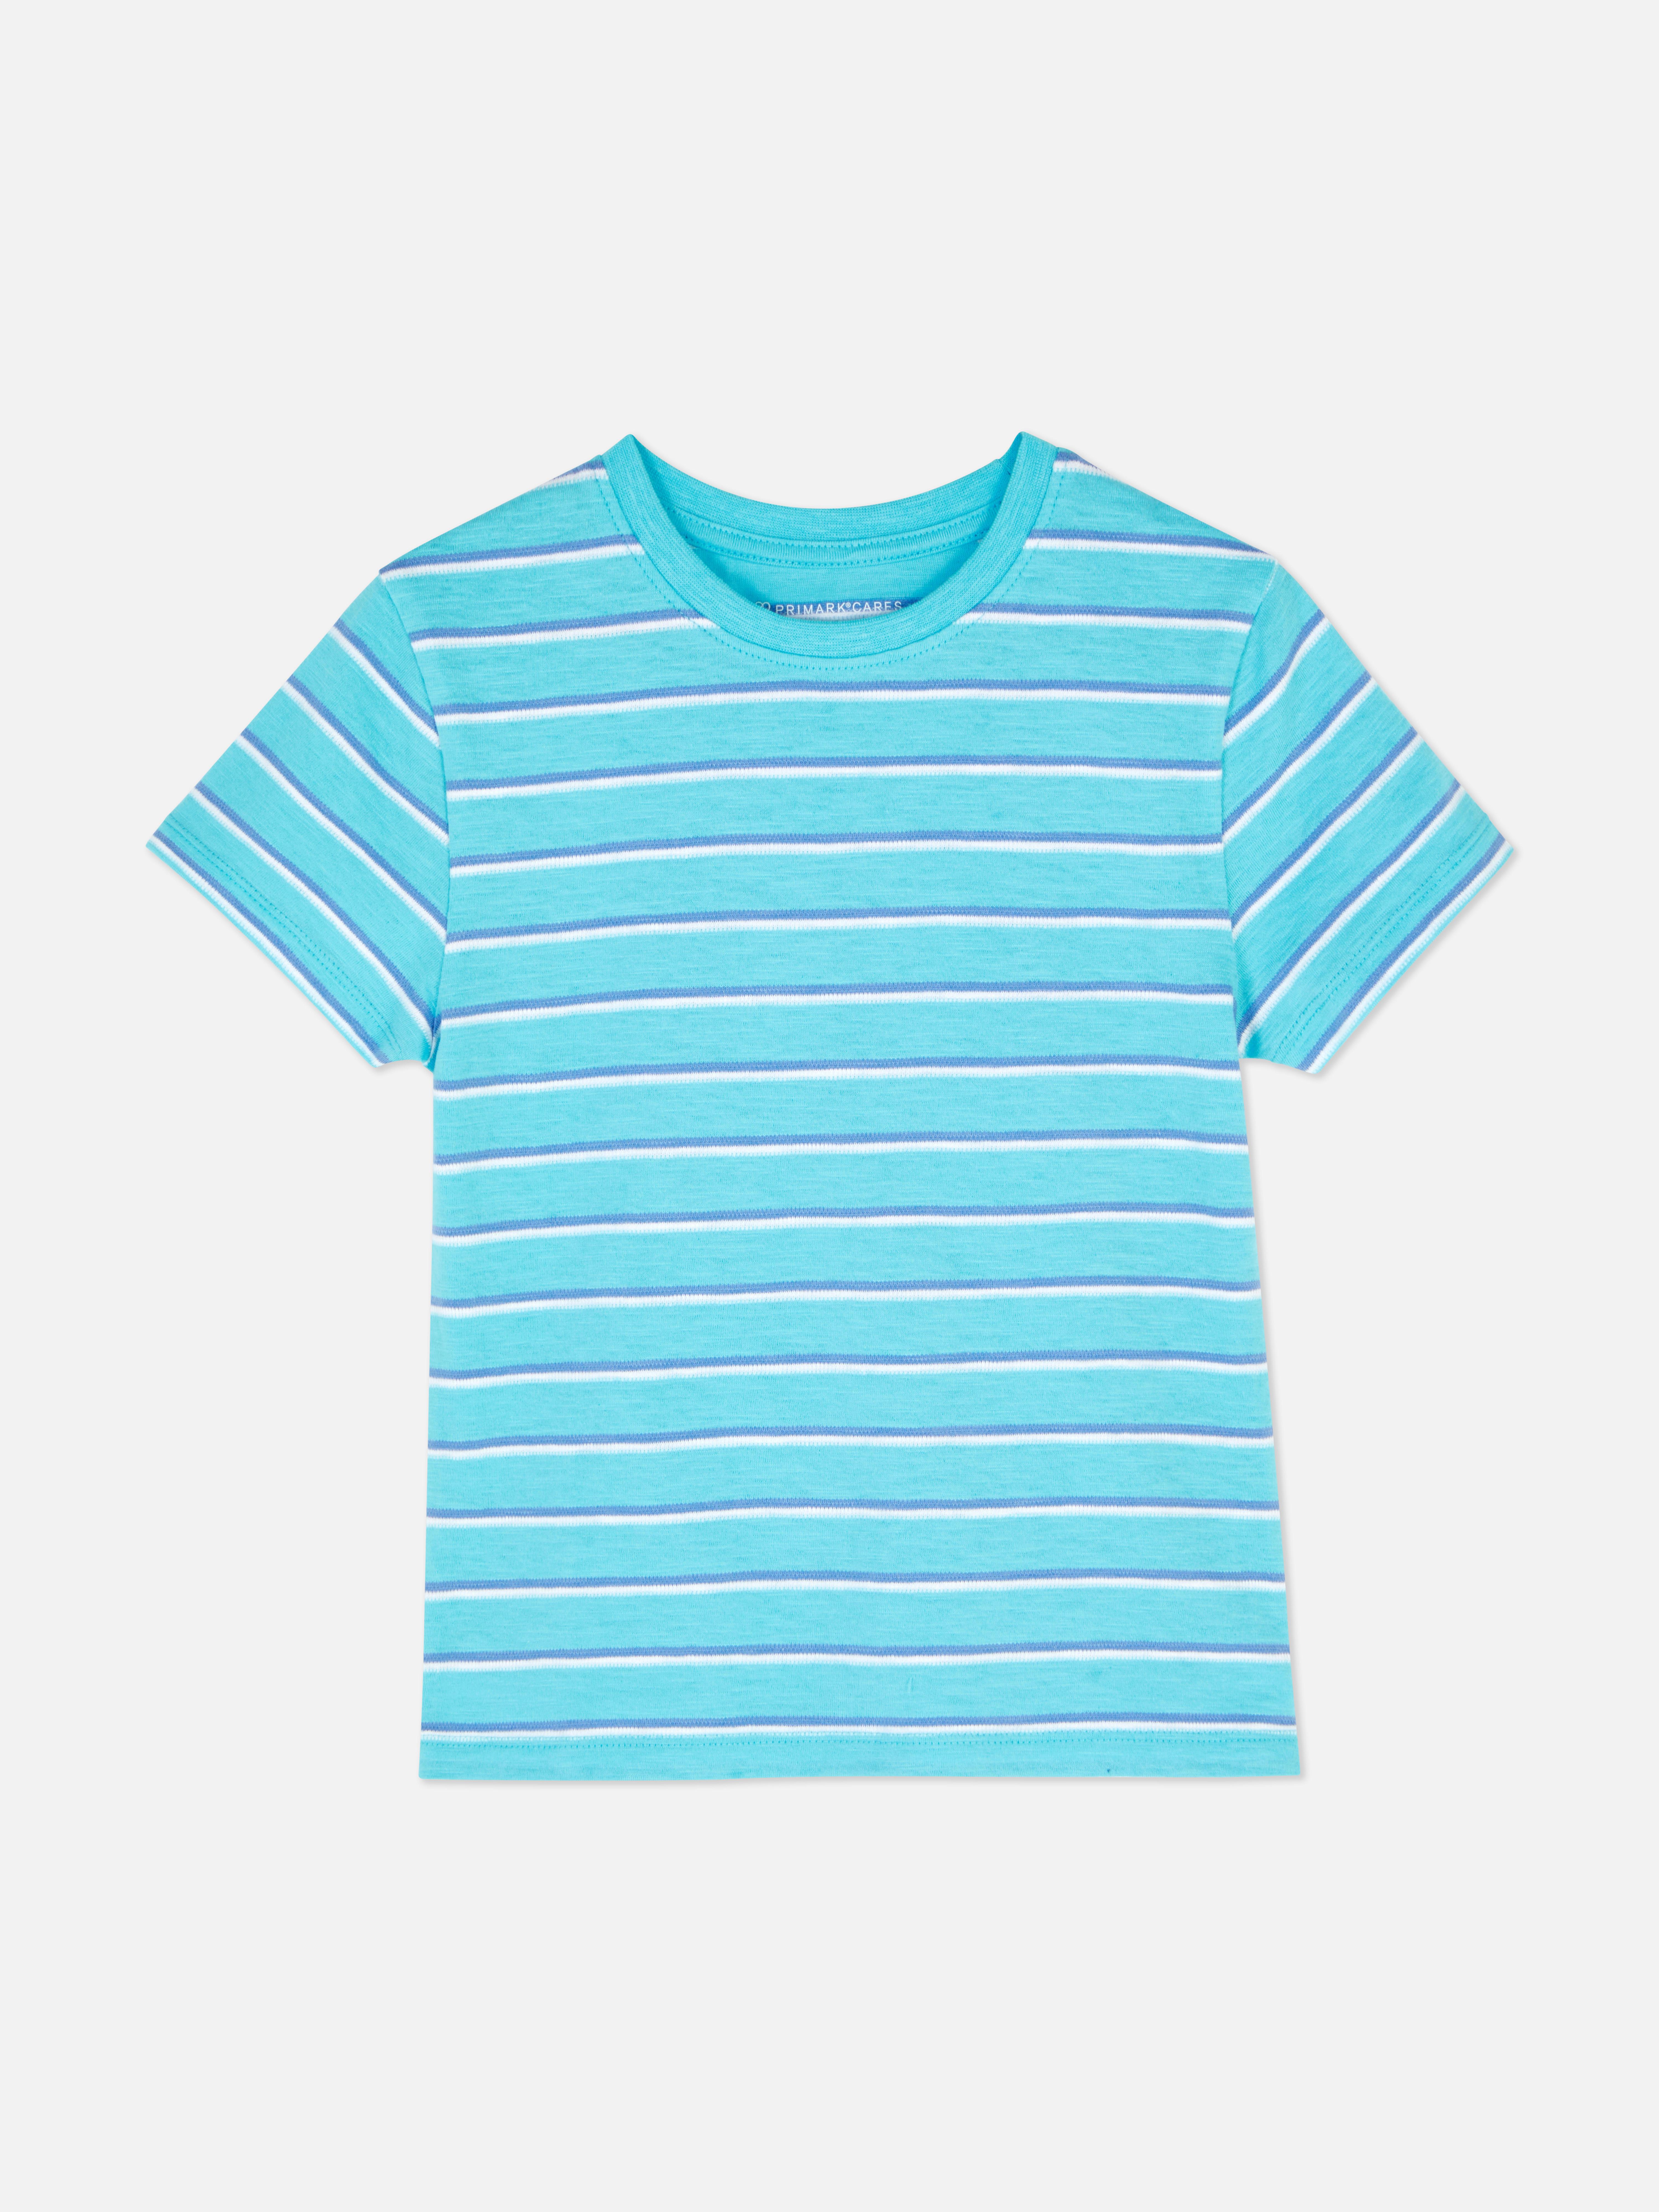 Stripe Short Sleeve T-Shirt